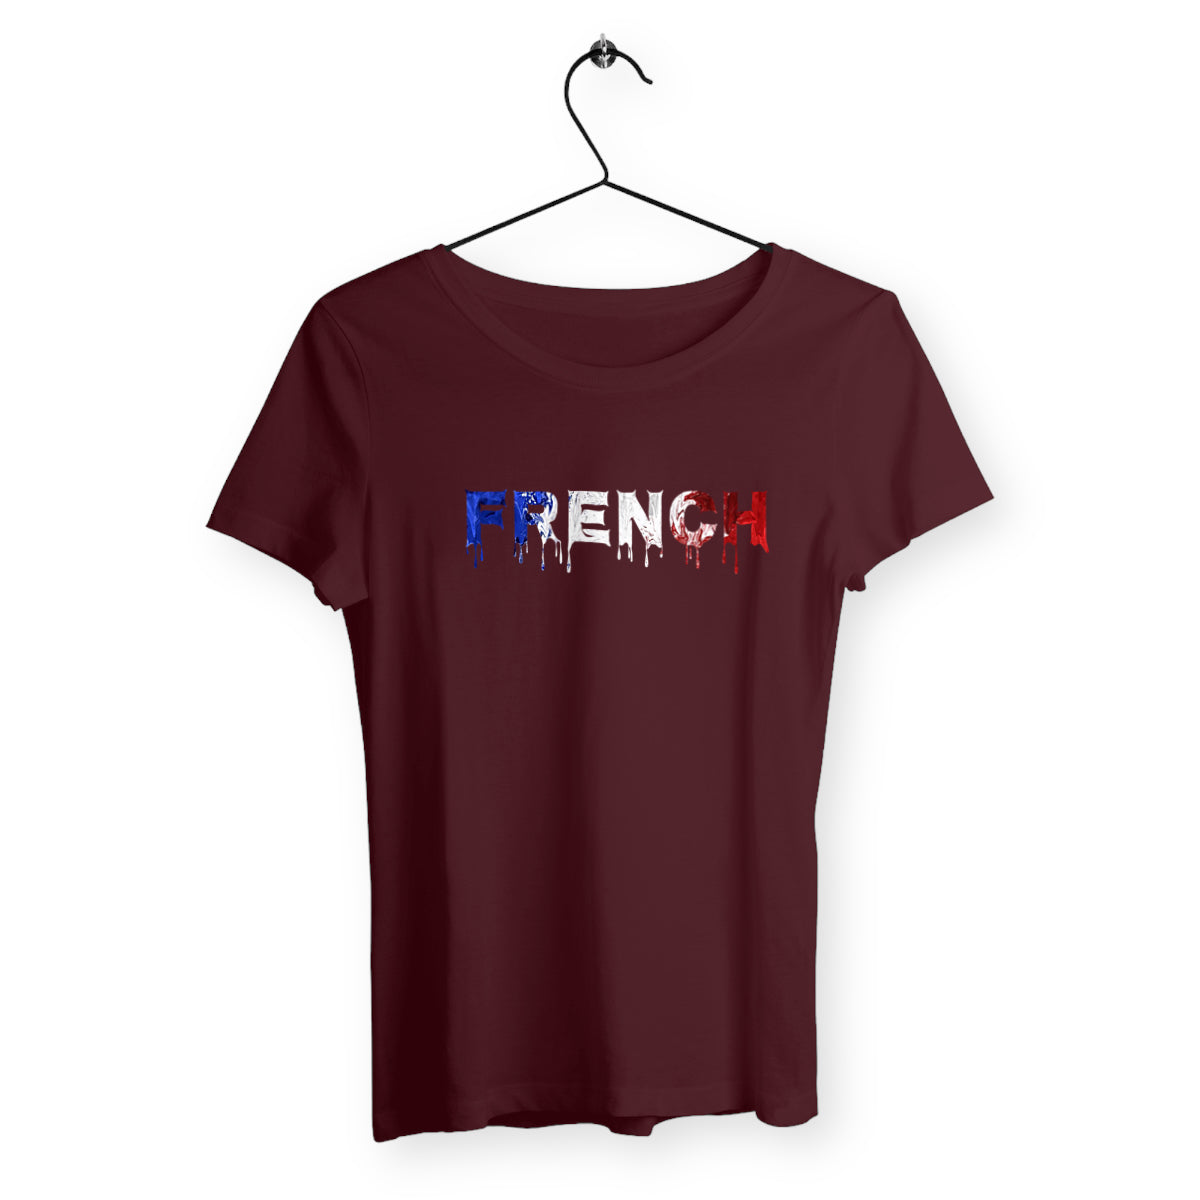 T-Shirt Femme Bio - Peinture French, t-shirt femme coton bio noir peinture french T-French, t-shirt french, t-shirt french touch femme, tee shirt french peinture rouge